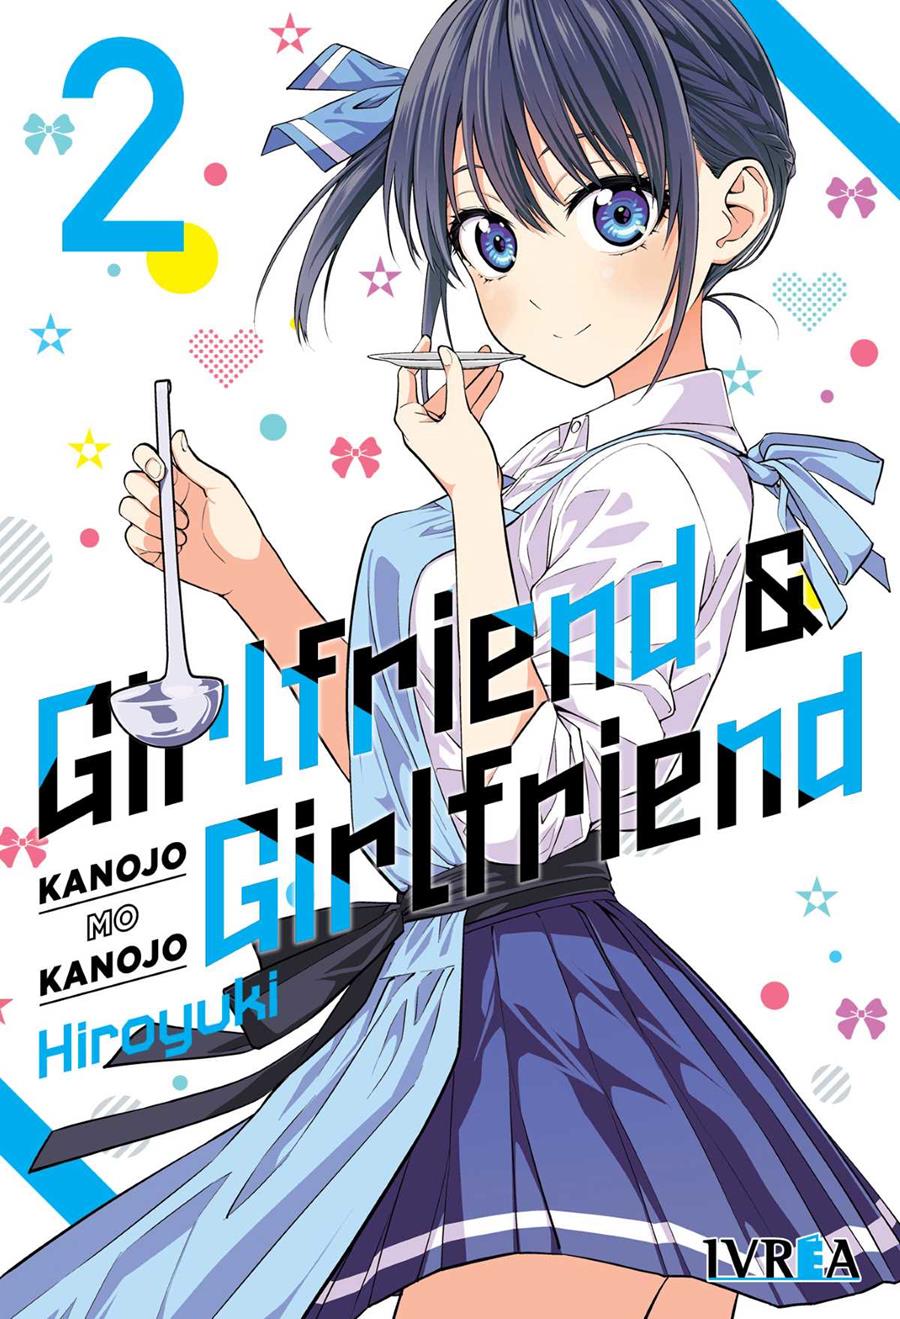 Girlfriend y girlfriend Vol.2 | N0922-IVR010 | Kanojo Mo Kanojo | Terra de Còmic - Tu tienda de cómics online especializada en cómics, manga y merchandising